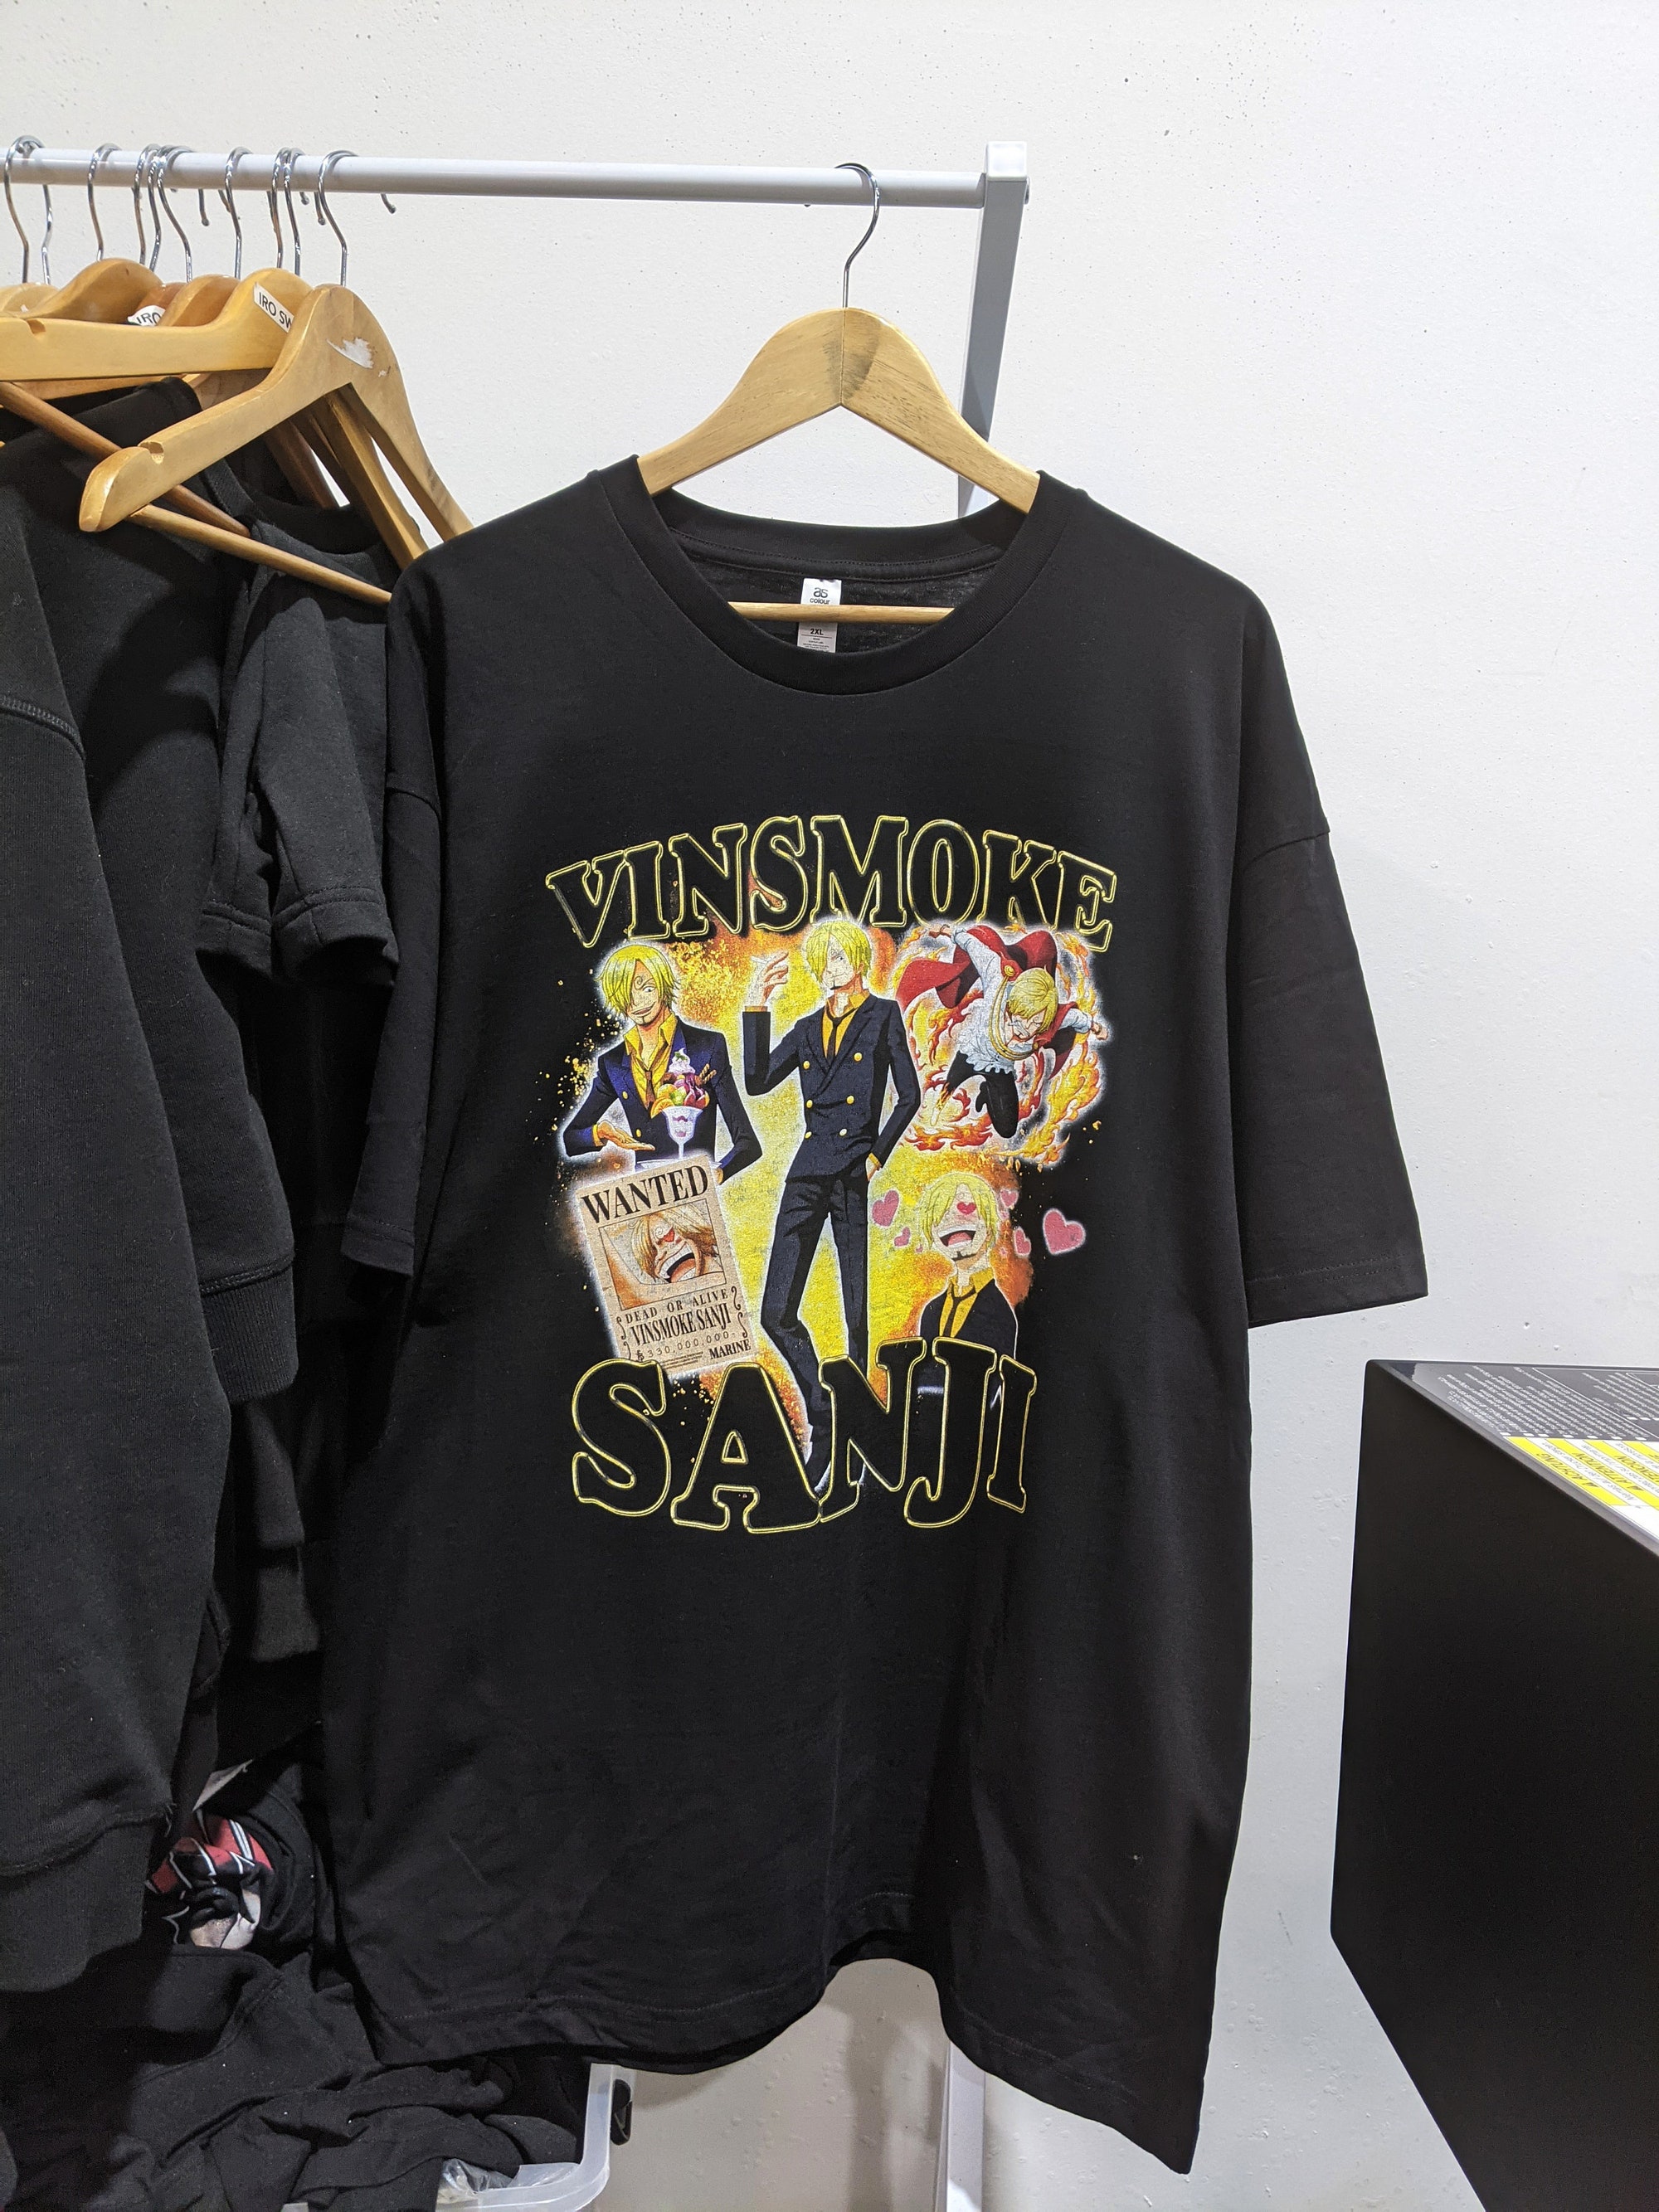 Discover Vinsmoke Sanji Anime Vintage Style T-Shirt!